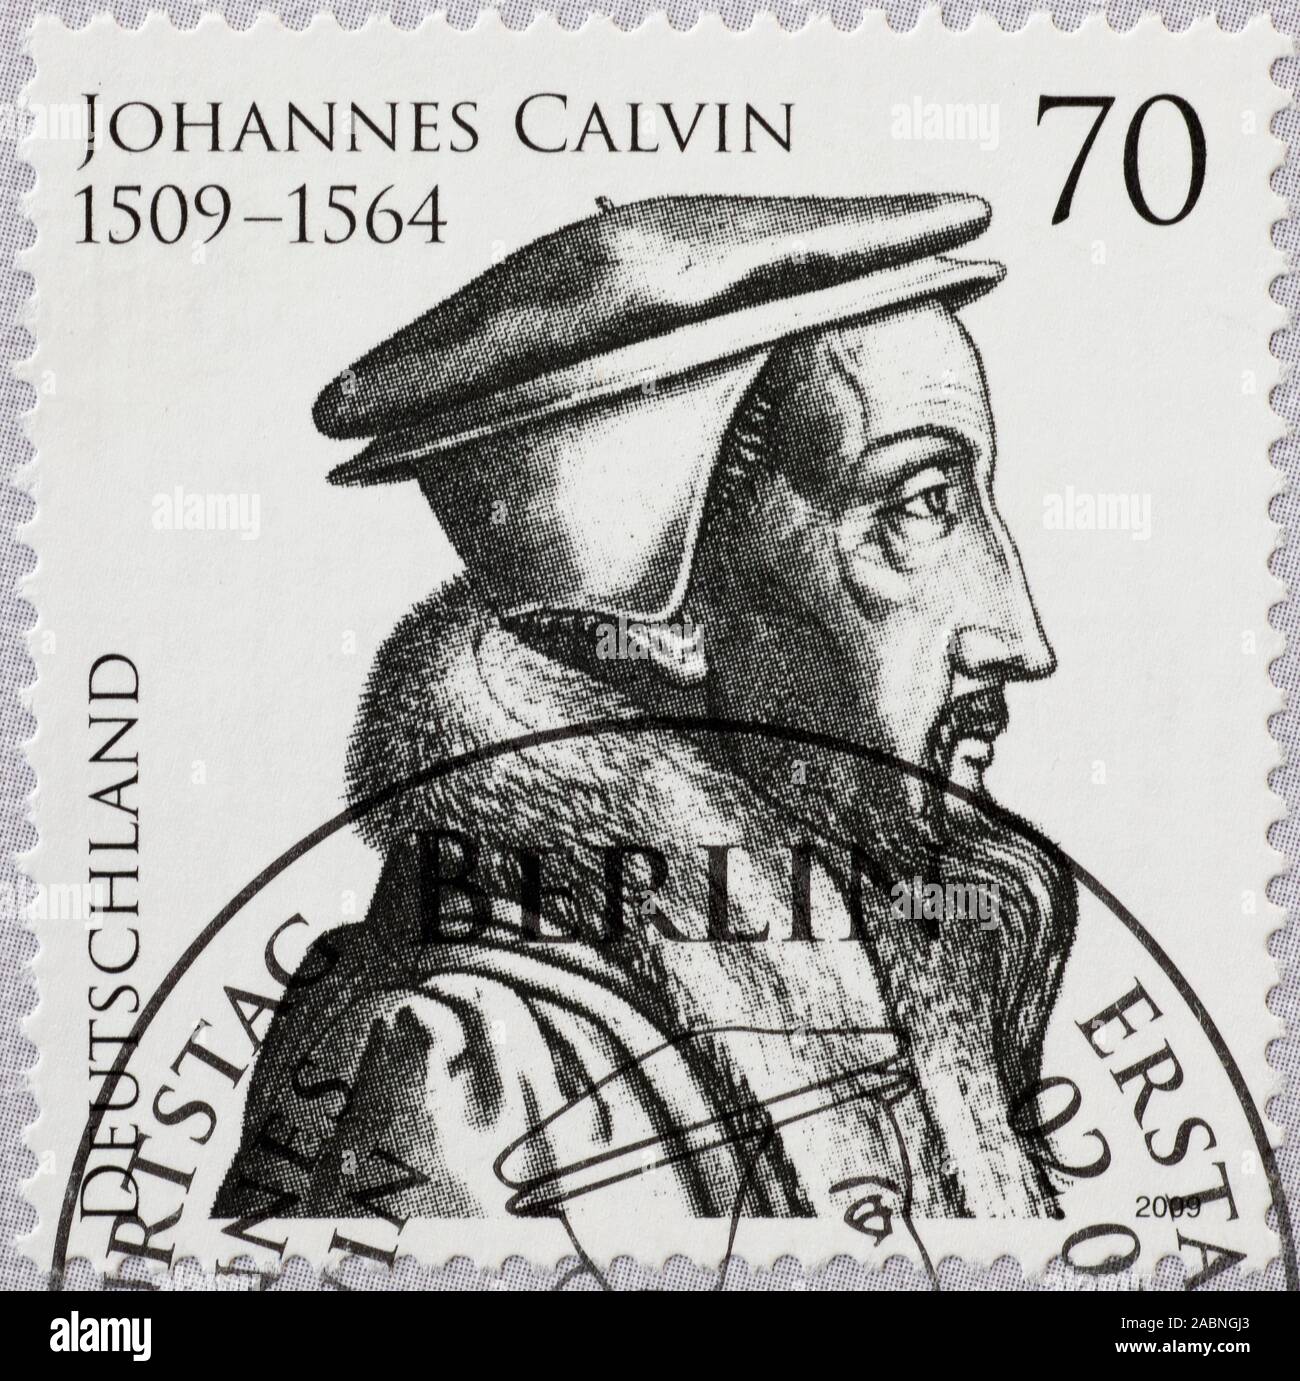 Portrait of John Calvin on german postage stamp Stock Photo